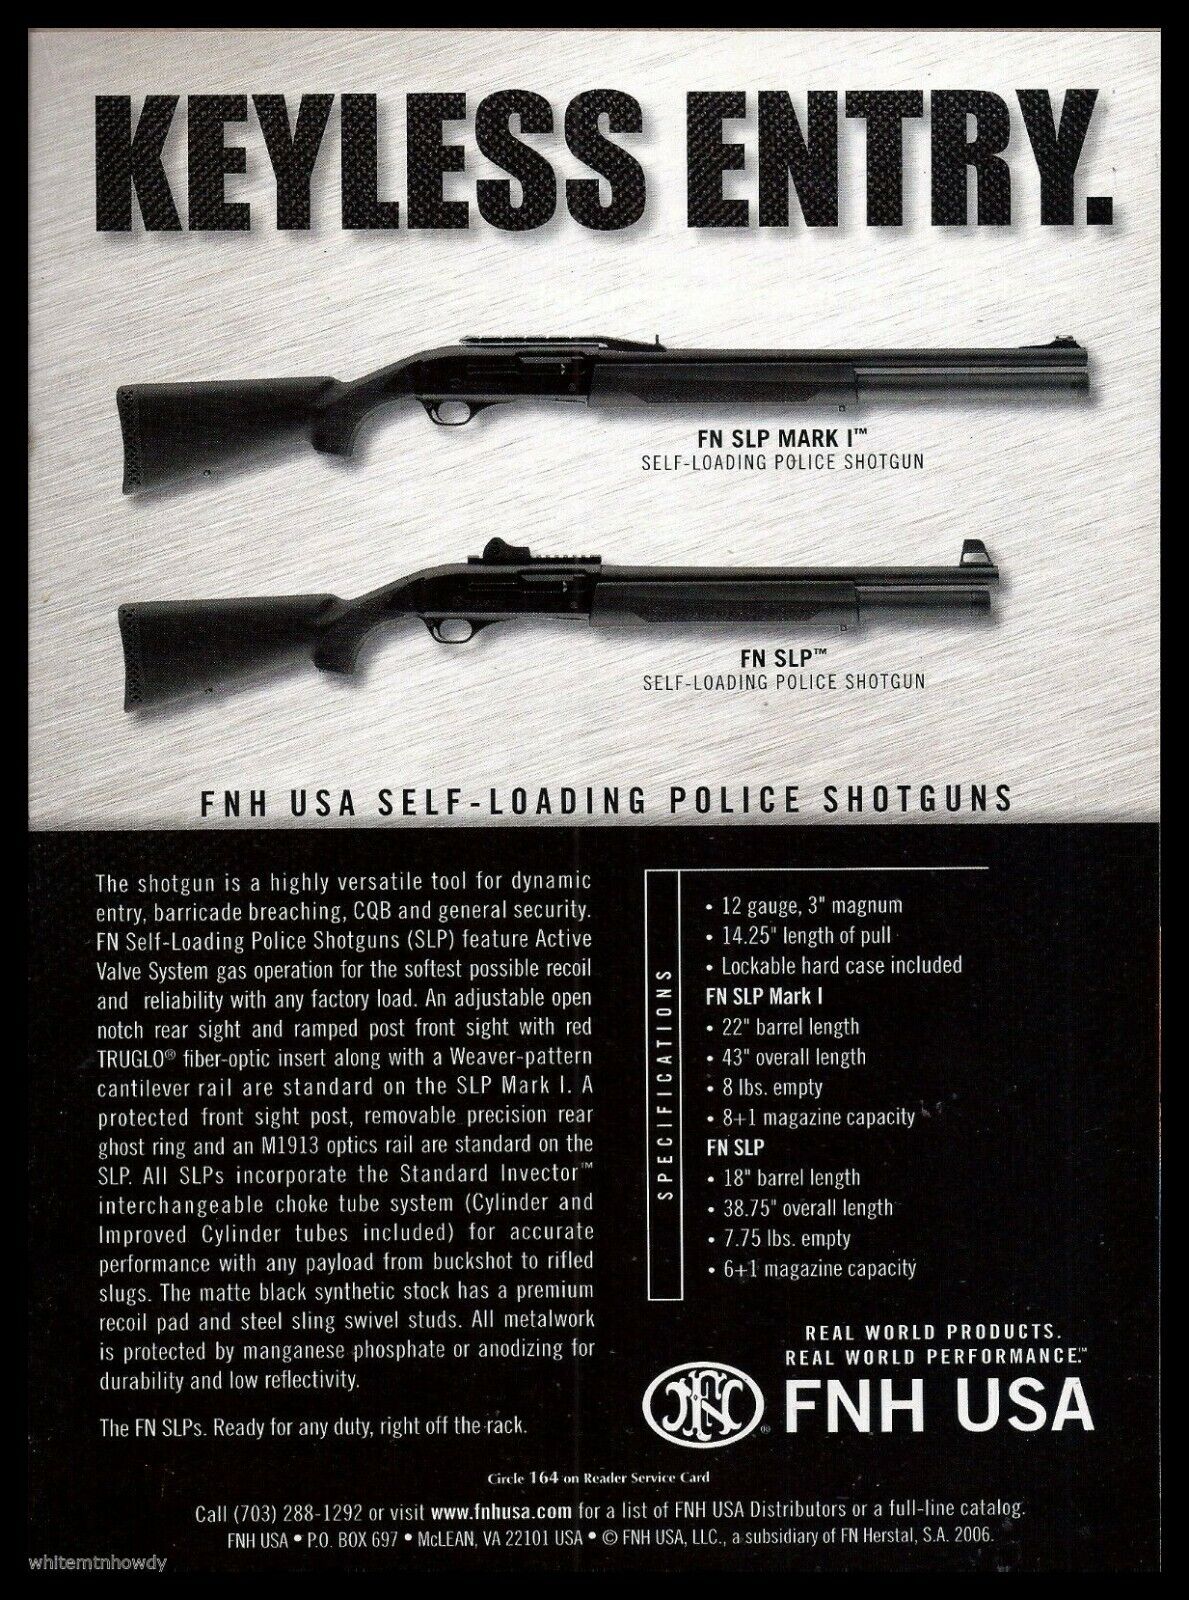 2006 FN SLP Mark I & SLP Self-loading POLICE SHOTGUN FNH USA AD